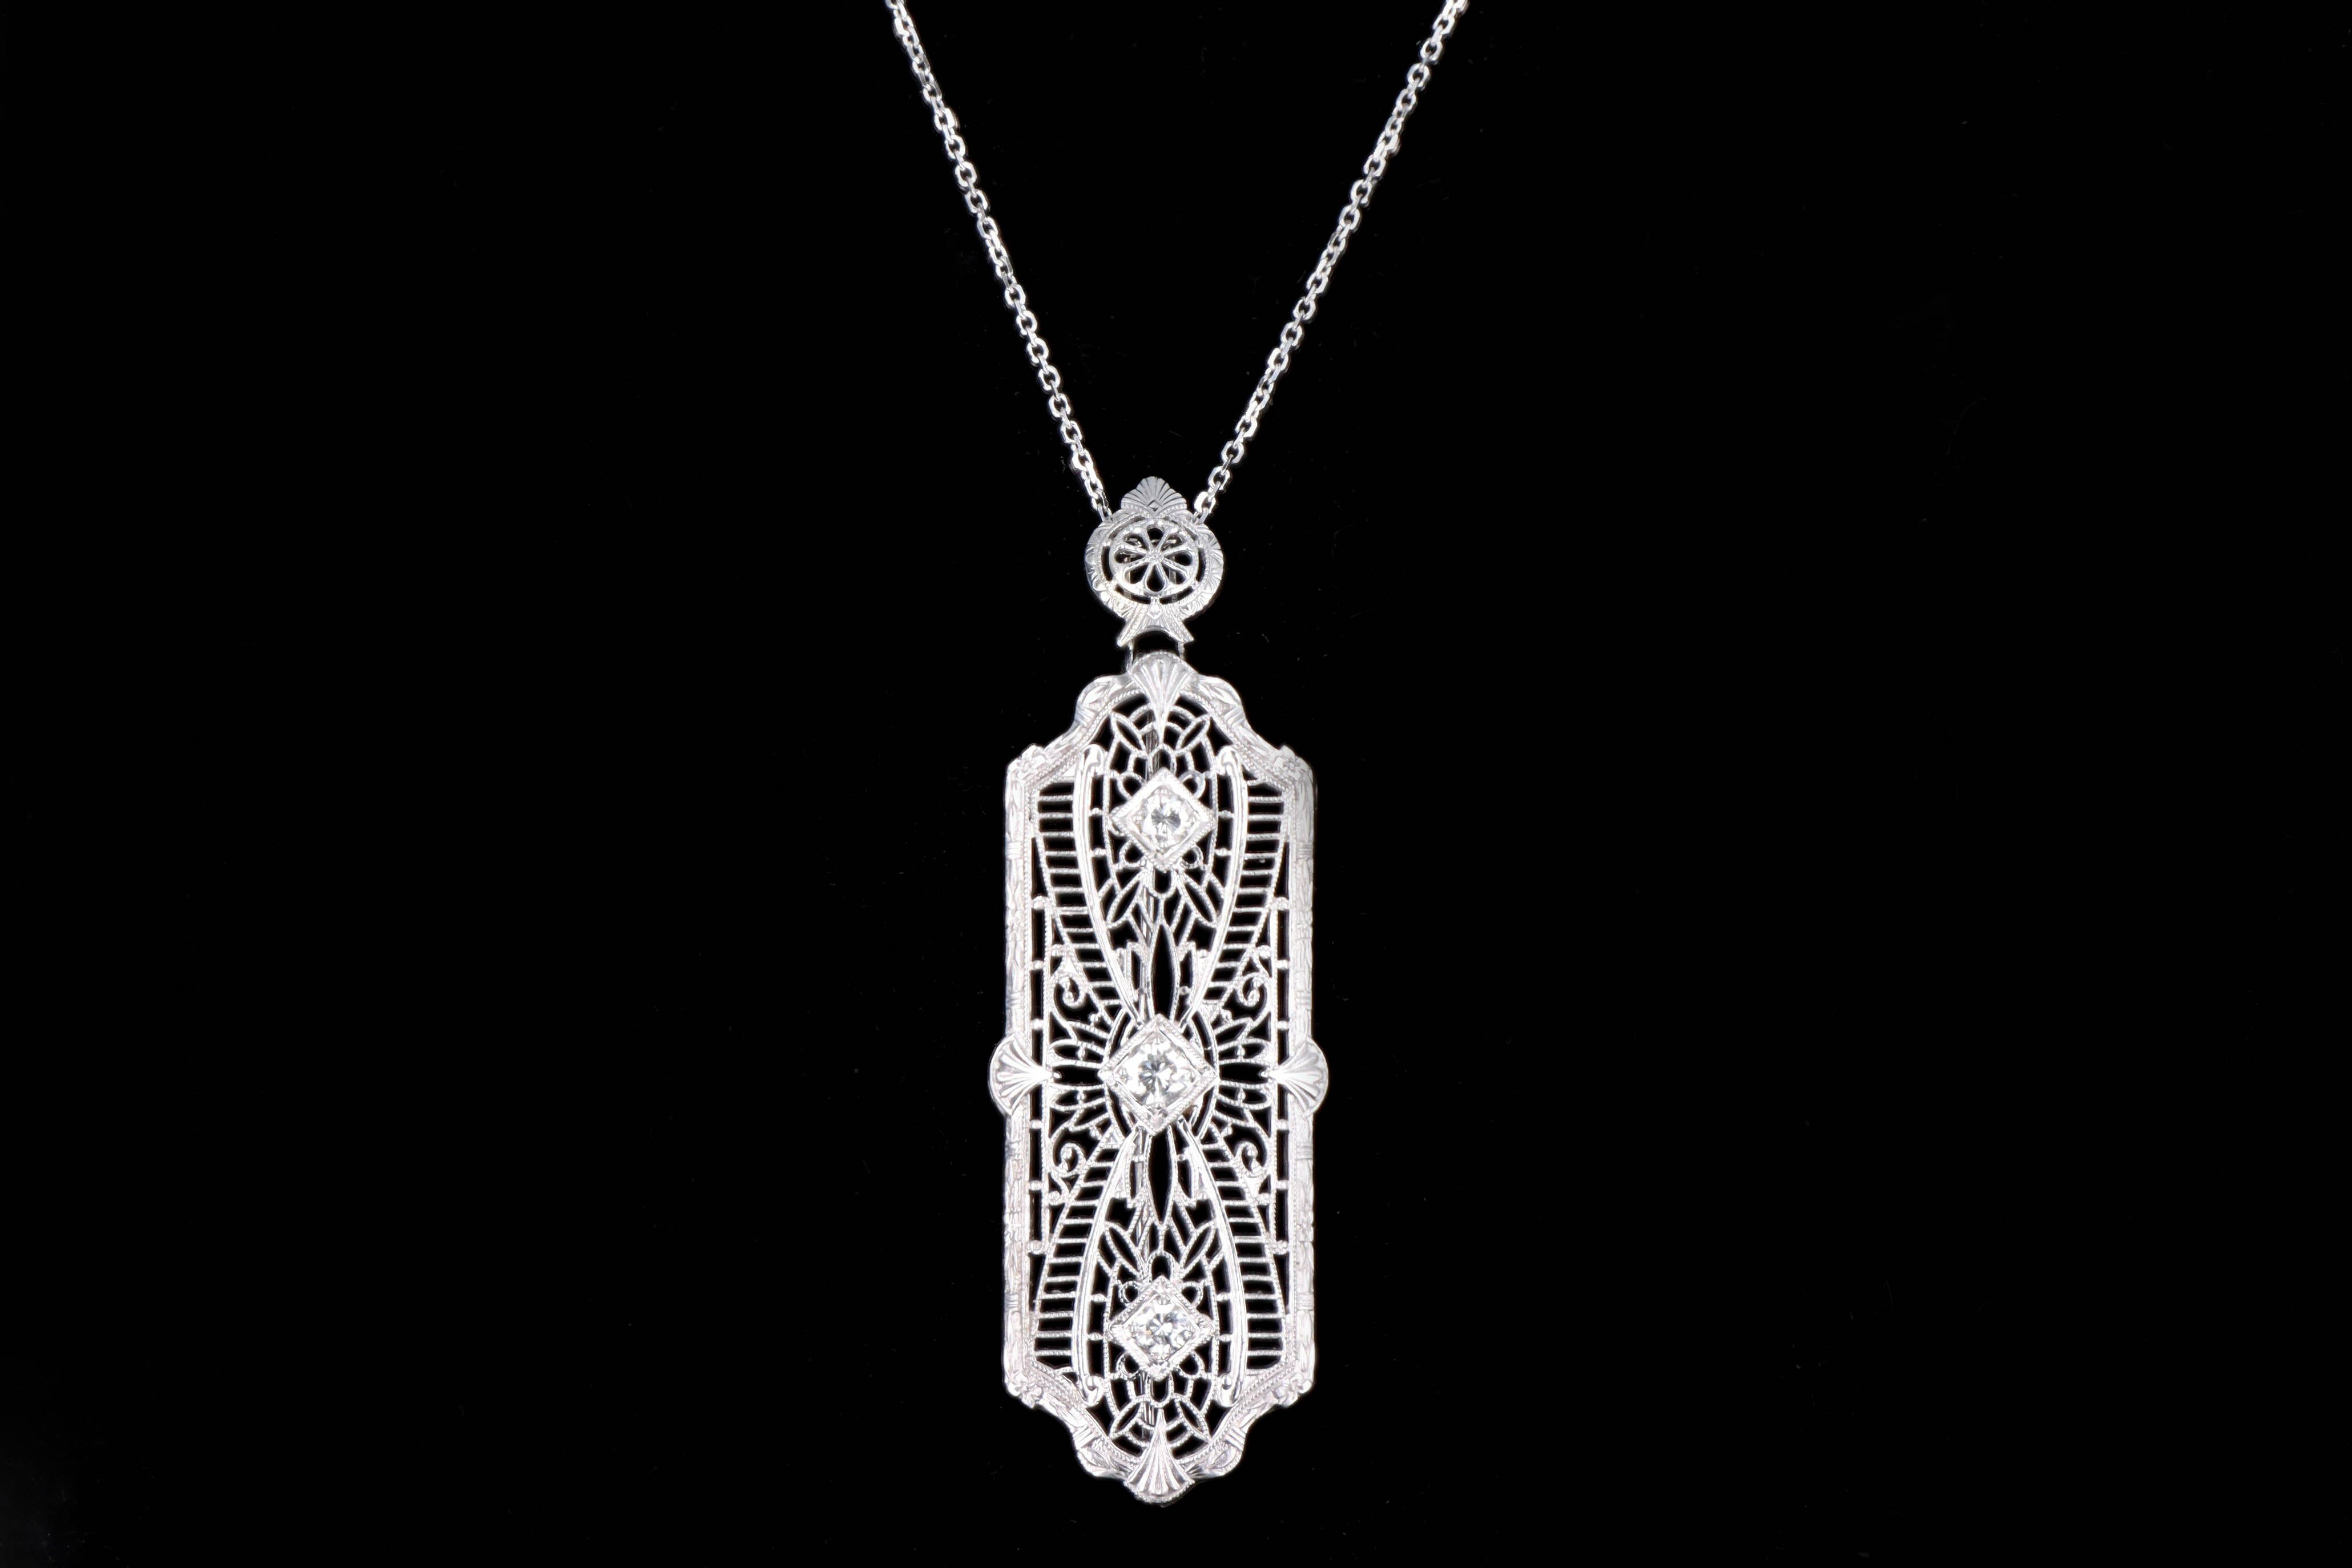 The Nightly Necklace: Princess Anne's Aquamarine Art Deco Pendant Necklace